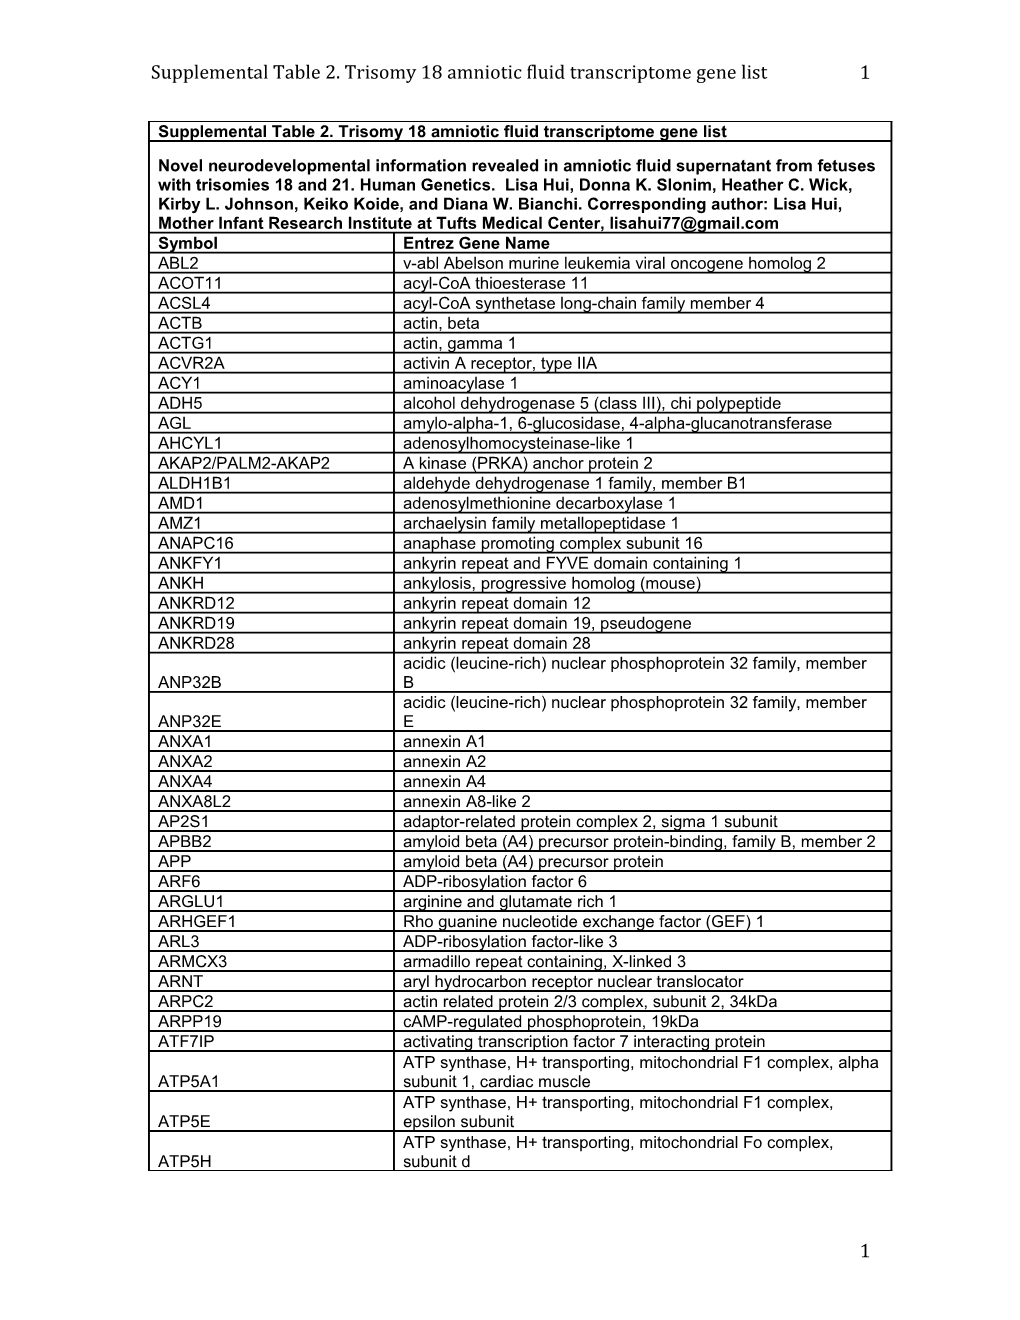 Supplemental Table 2. Trisomy 18 Amniotic Fluid Transcriptome Gene List